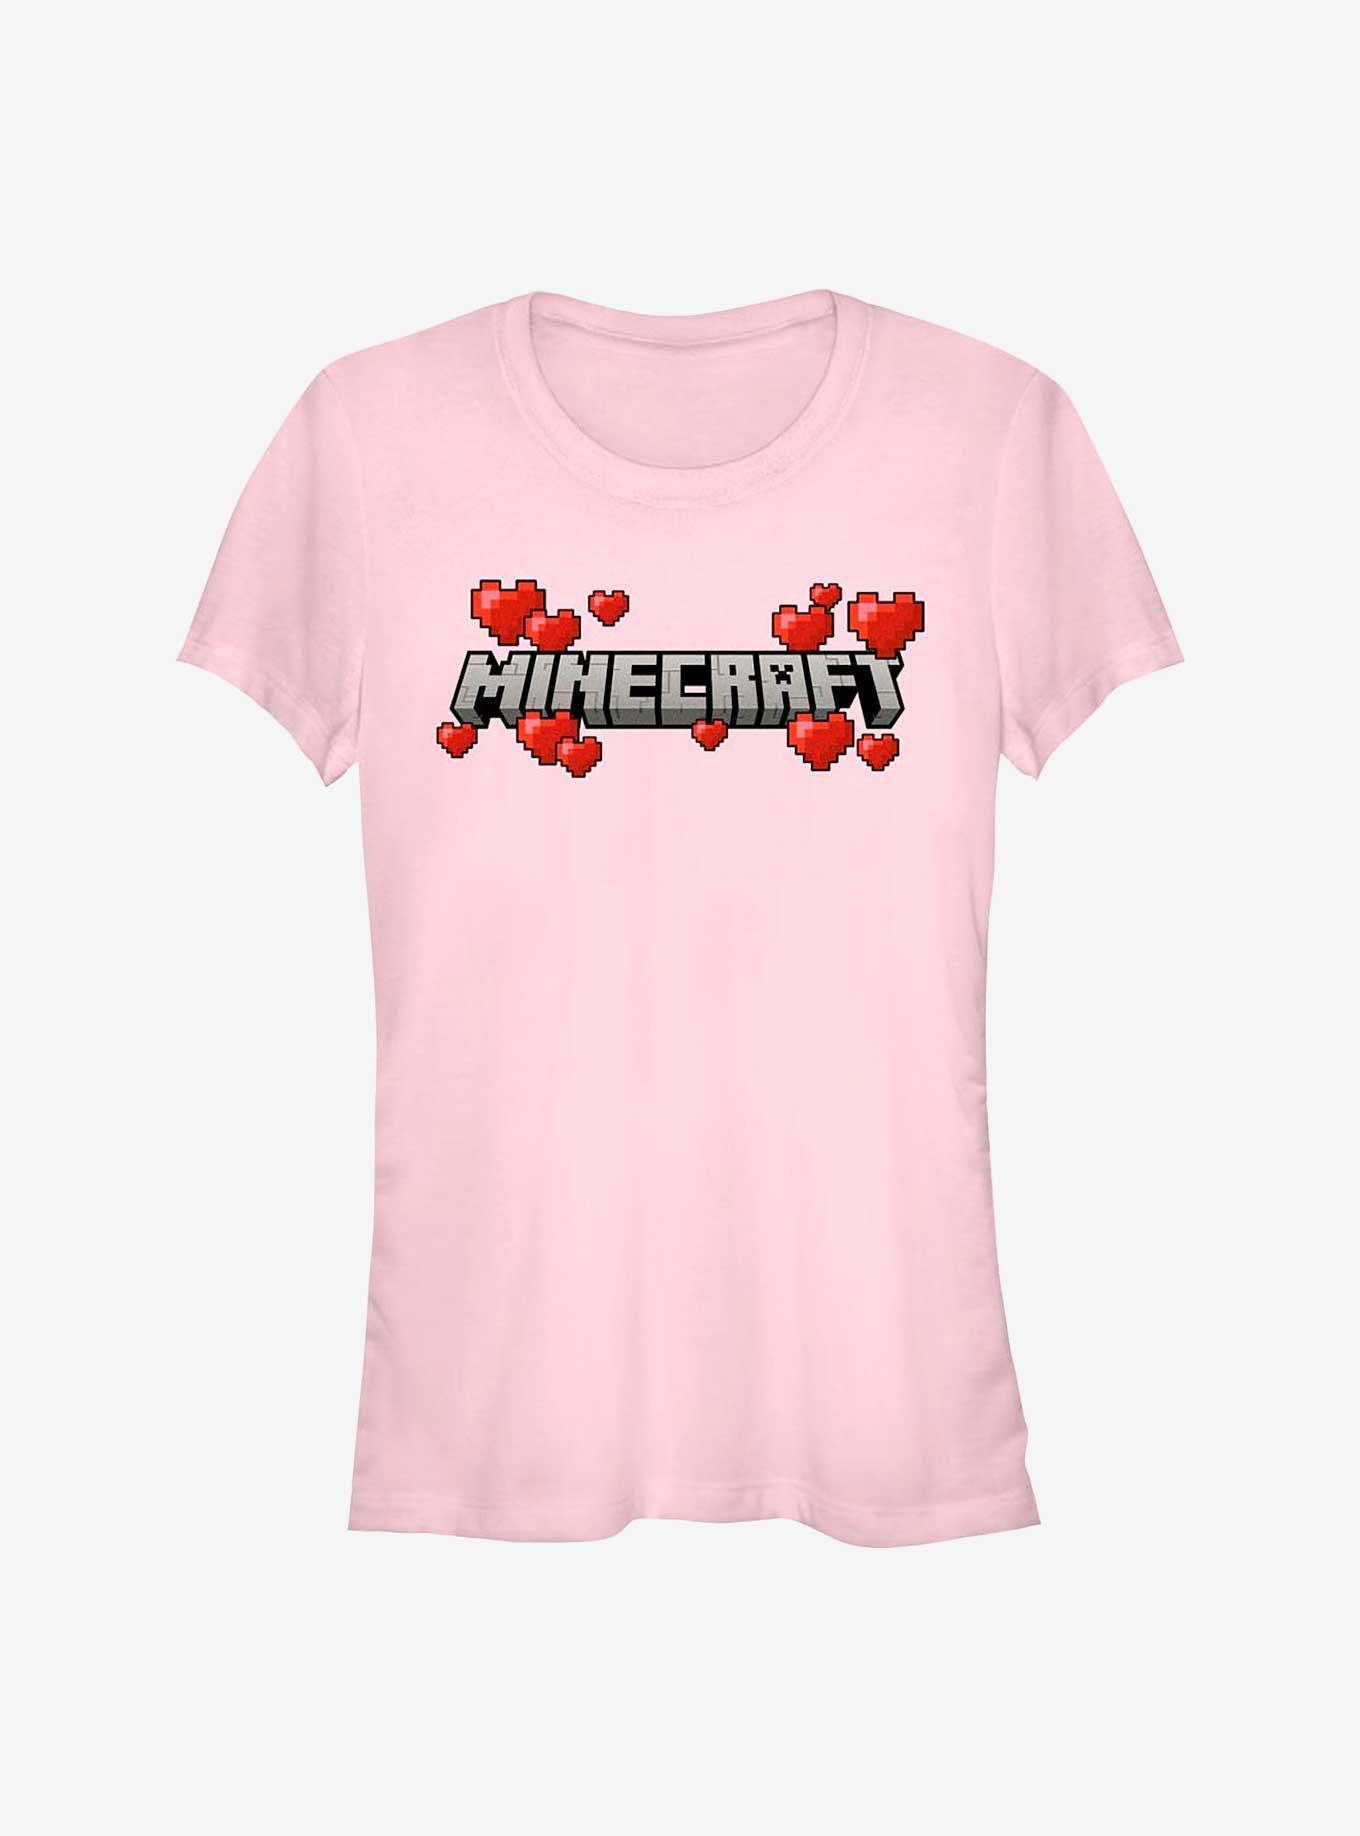 Minecraft Hearts Logo Girls T-Shirt, LIGHT PINK, hi-res